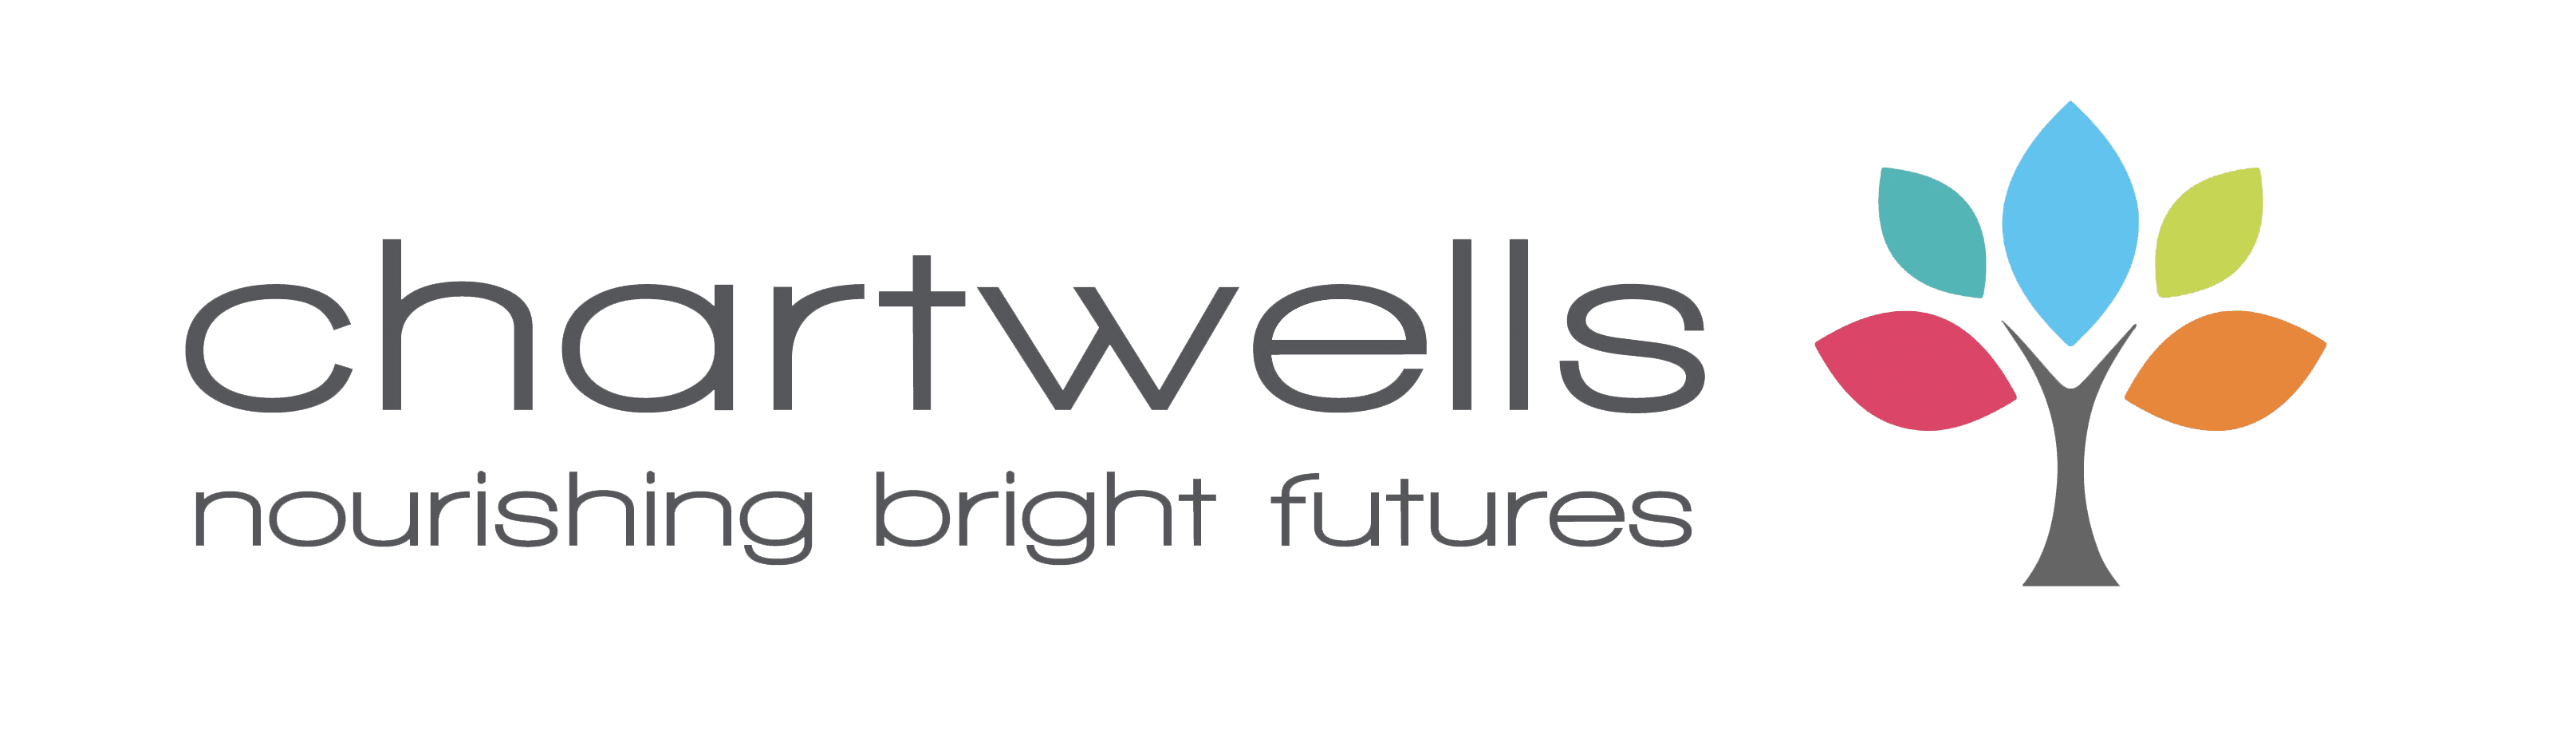 Chartwells Independent Schools logo